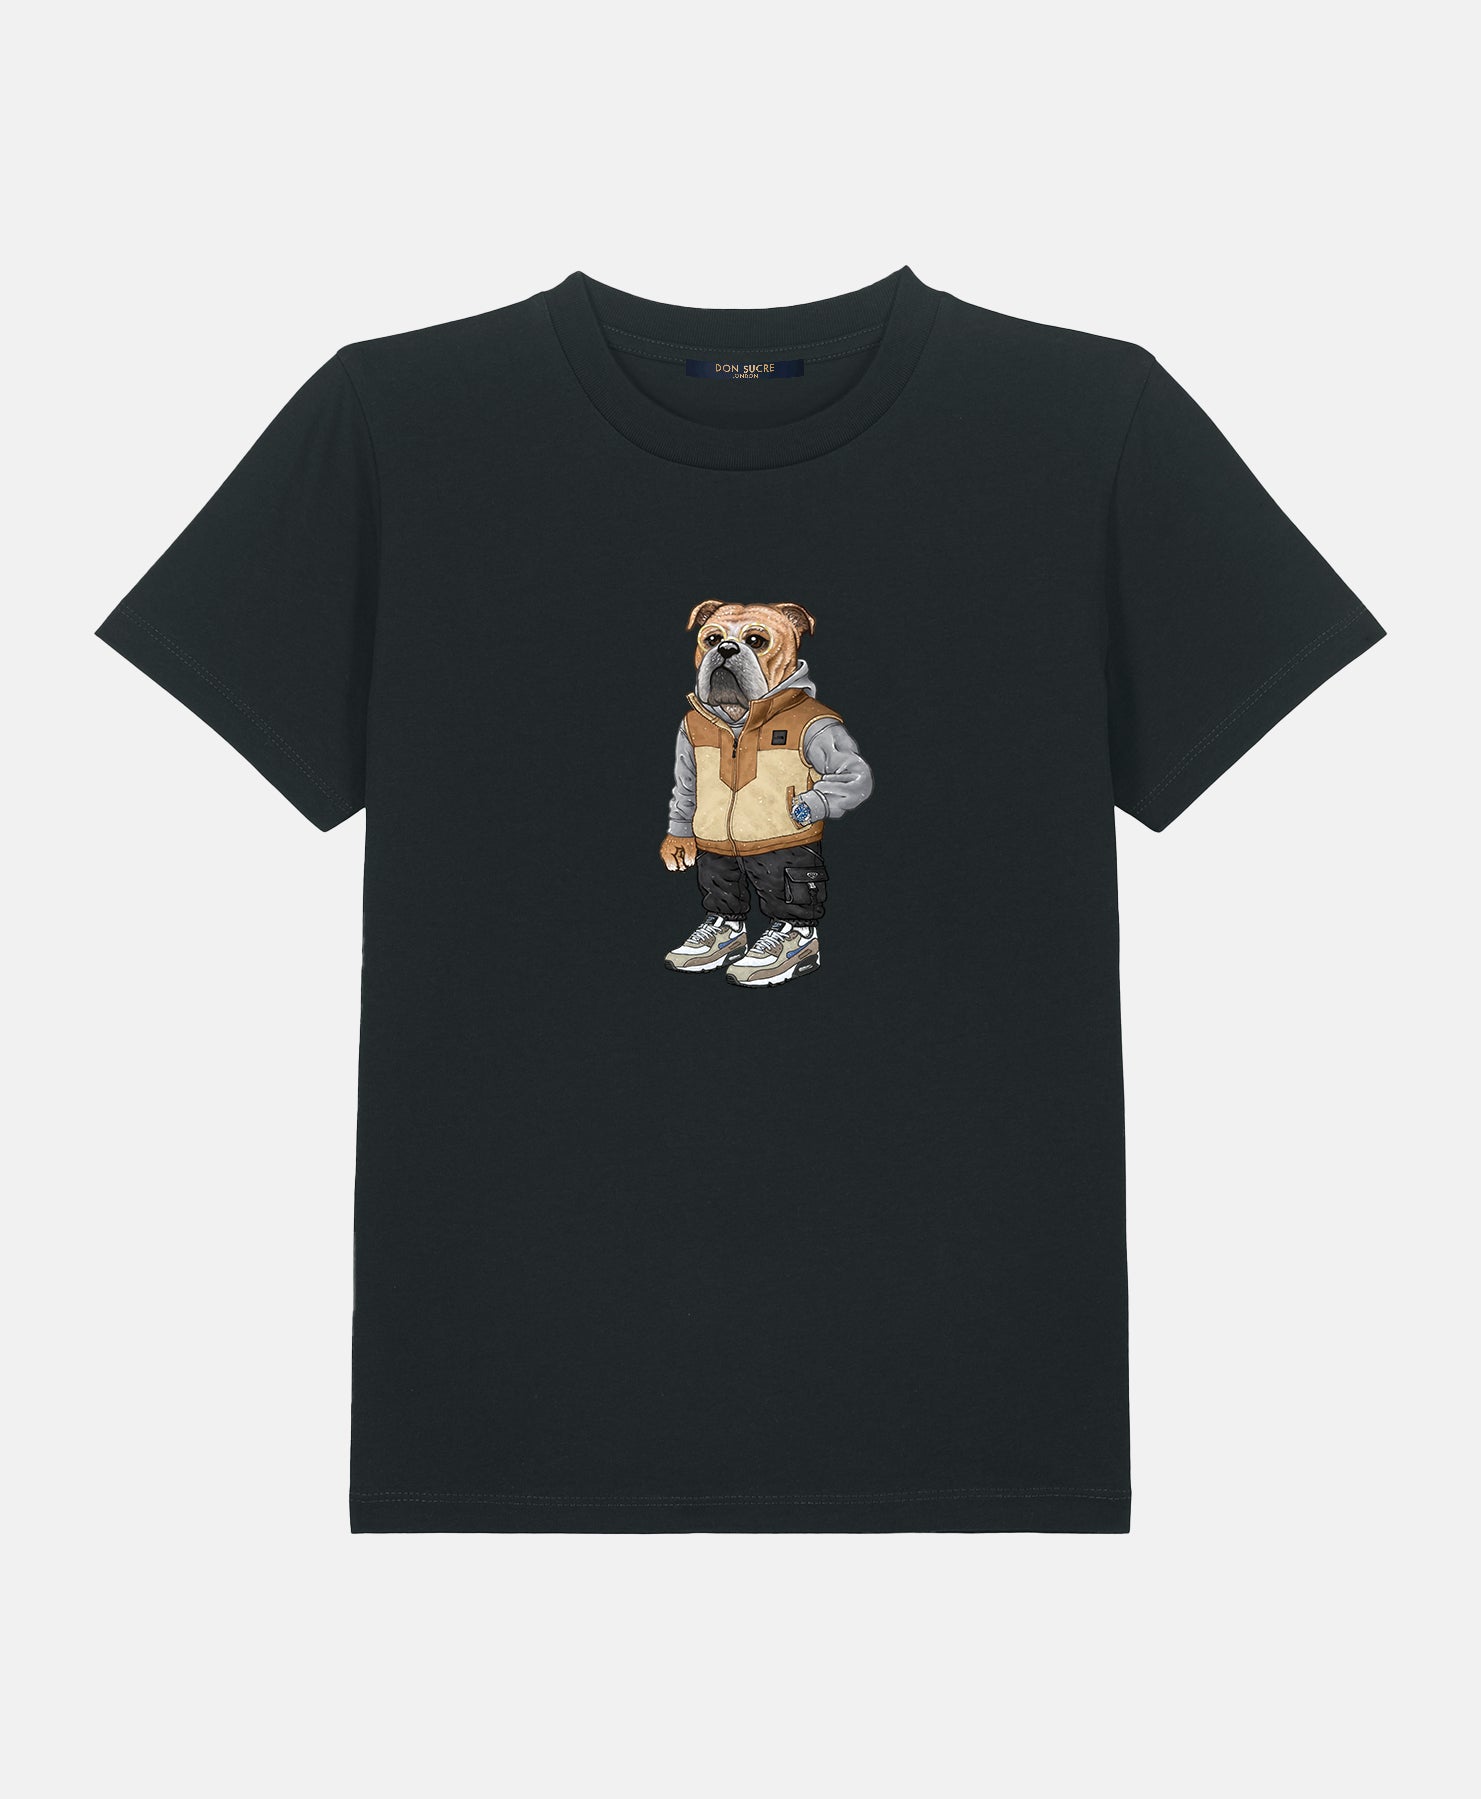 Bulldog "Lowkey" T-shirt Kids